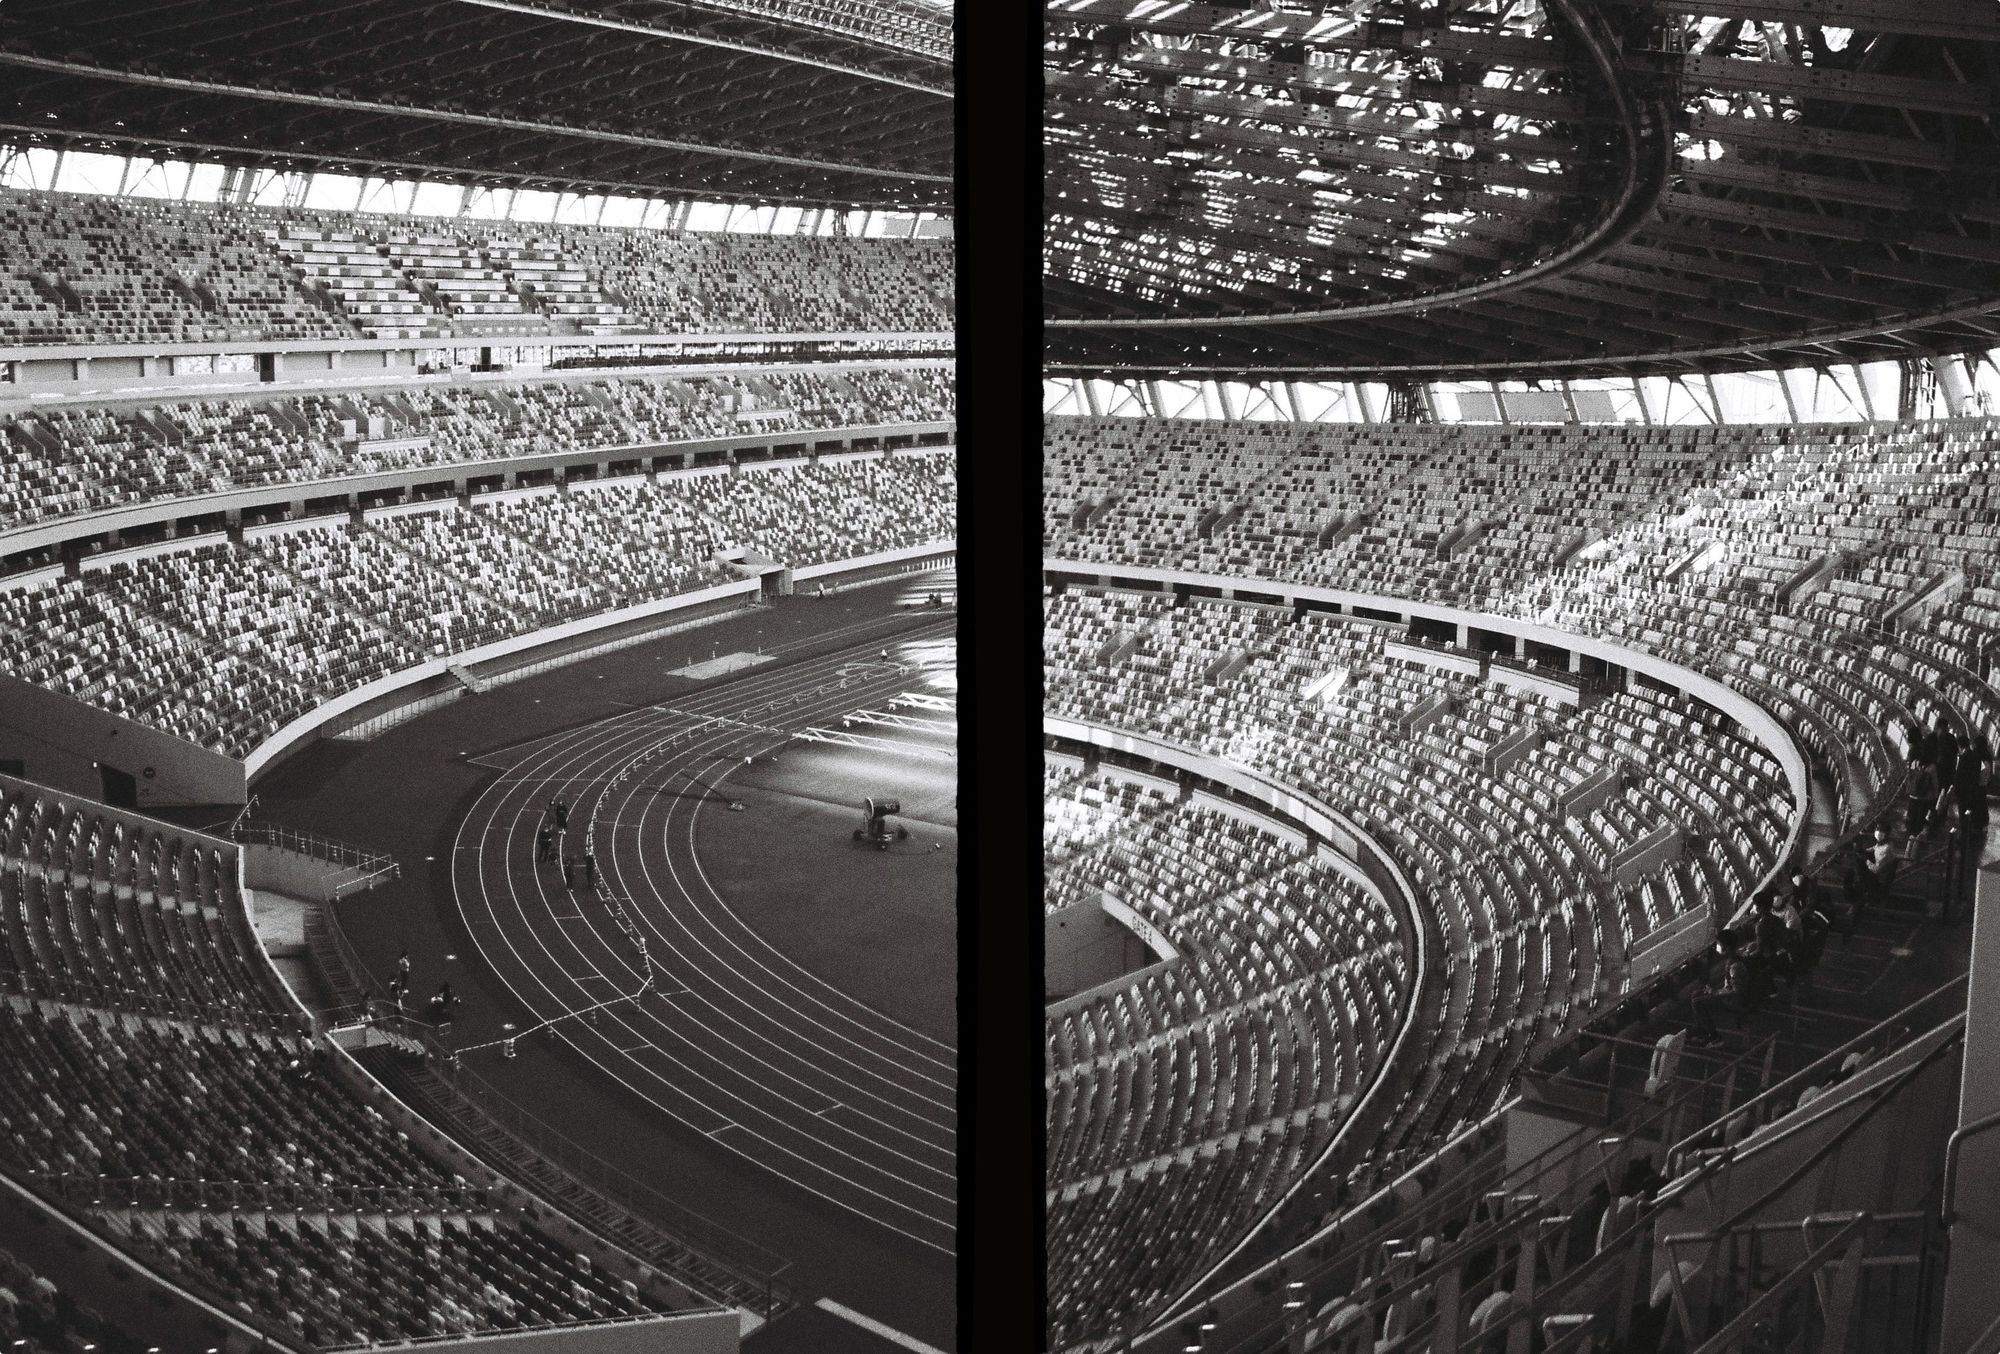 inside the Japan national stadium